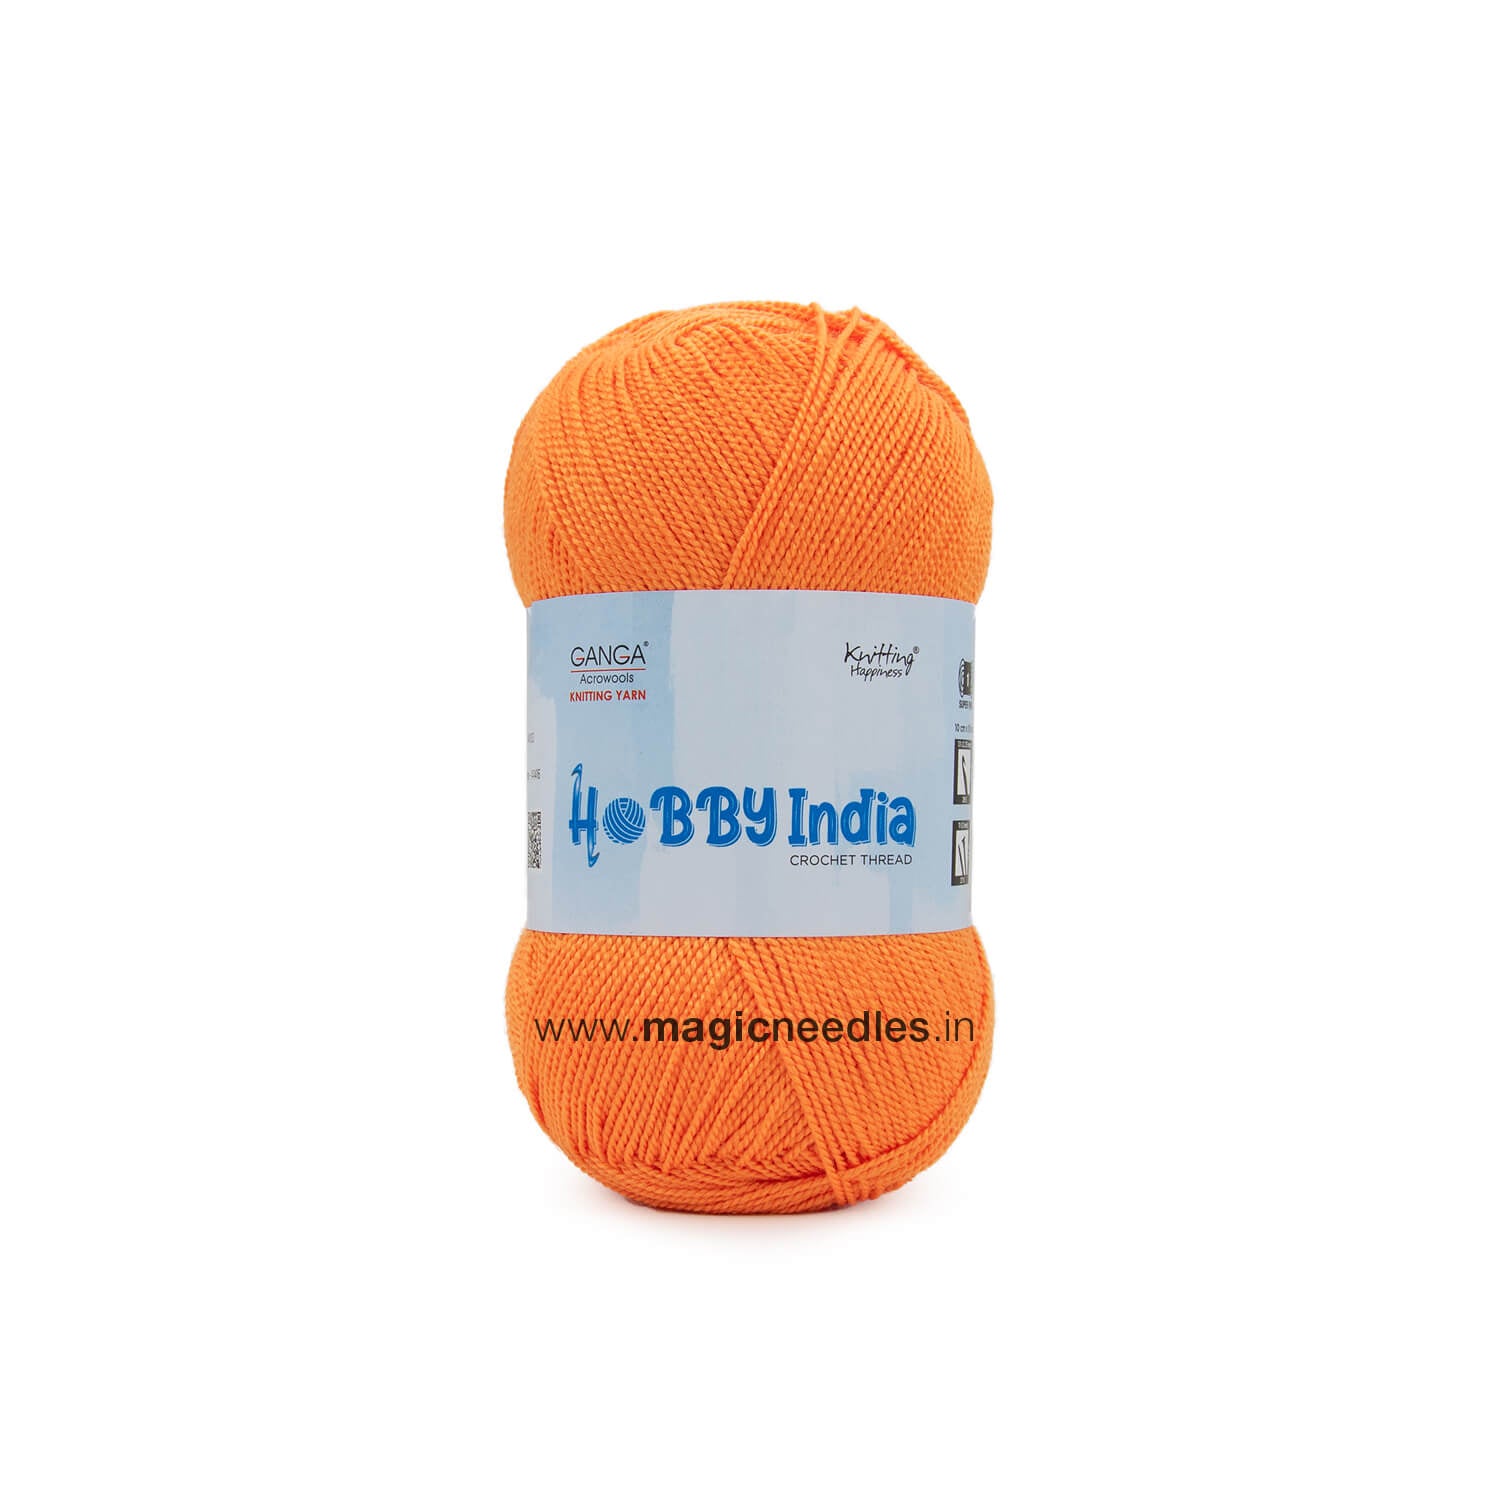 Ganga Hobby India Crochet Thread - Orange 71